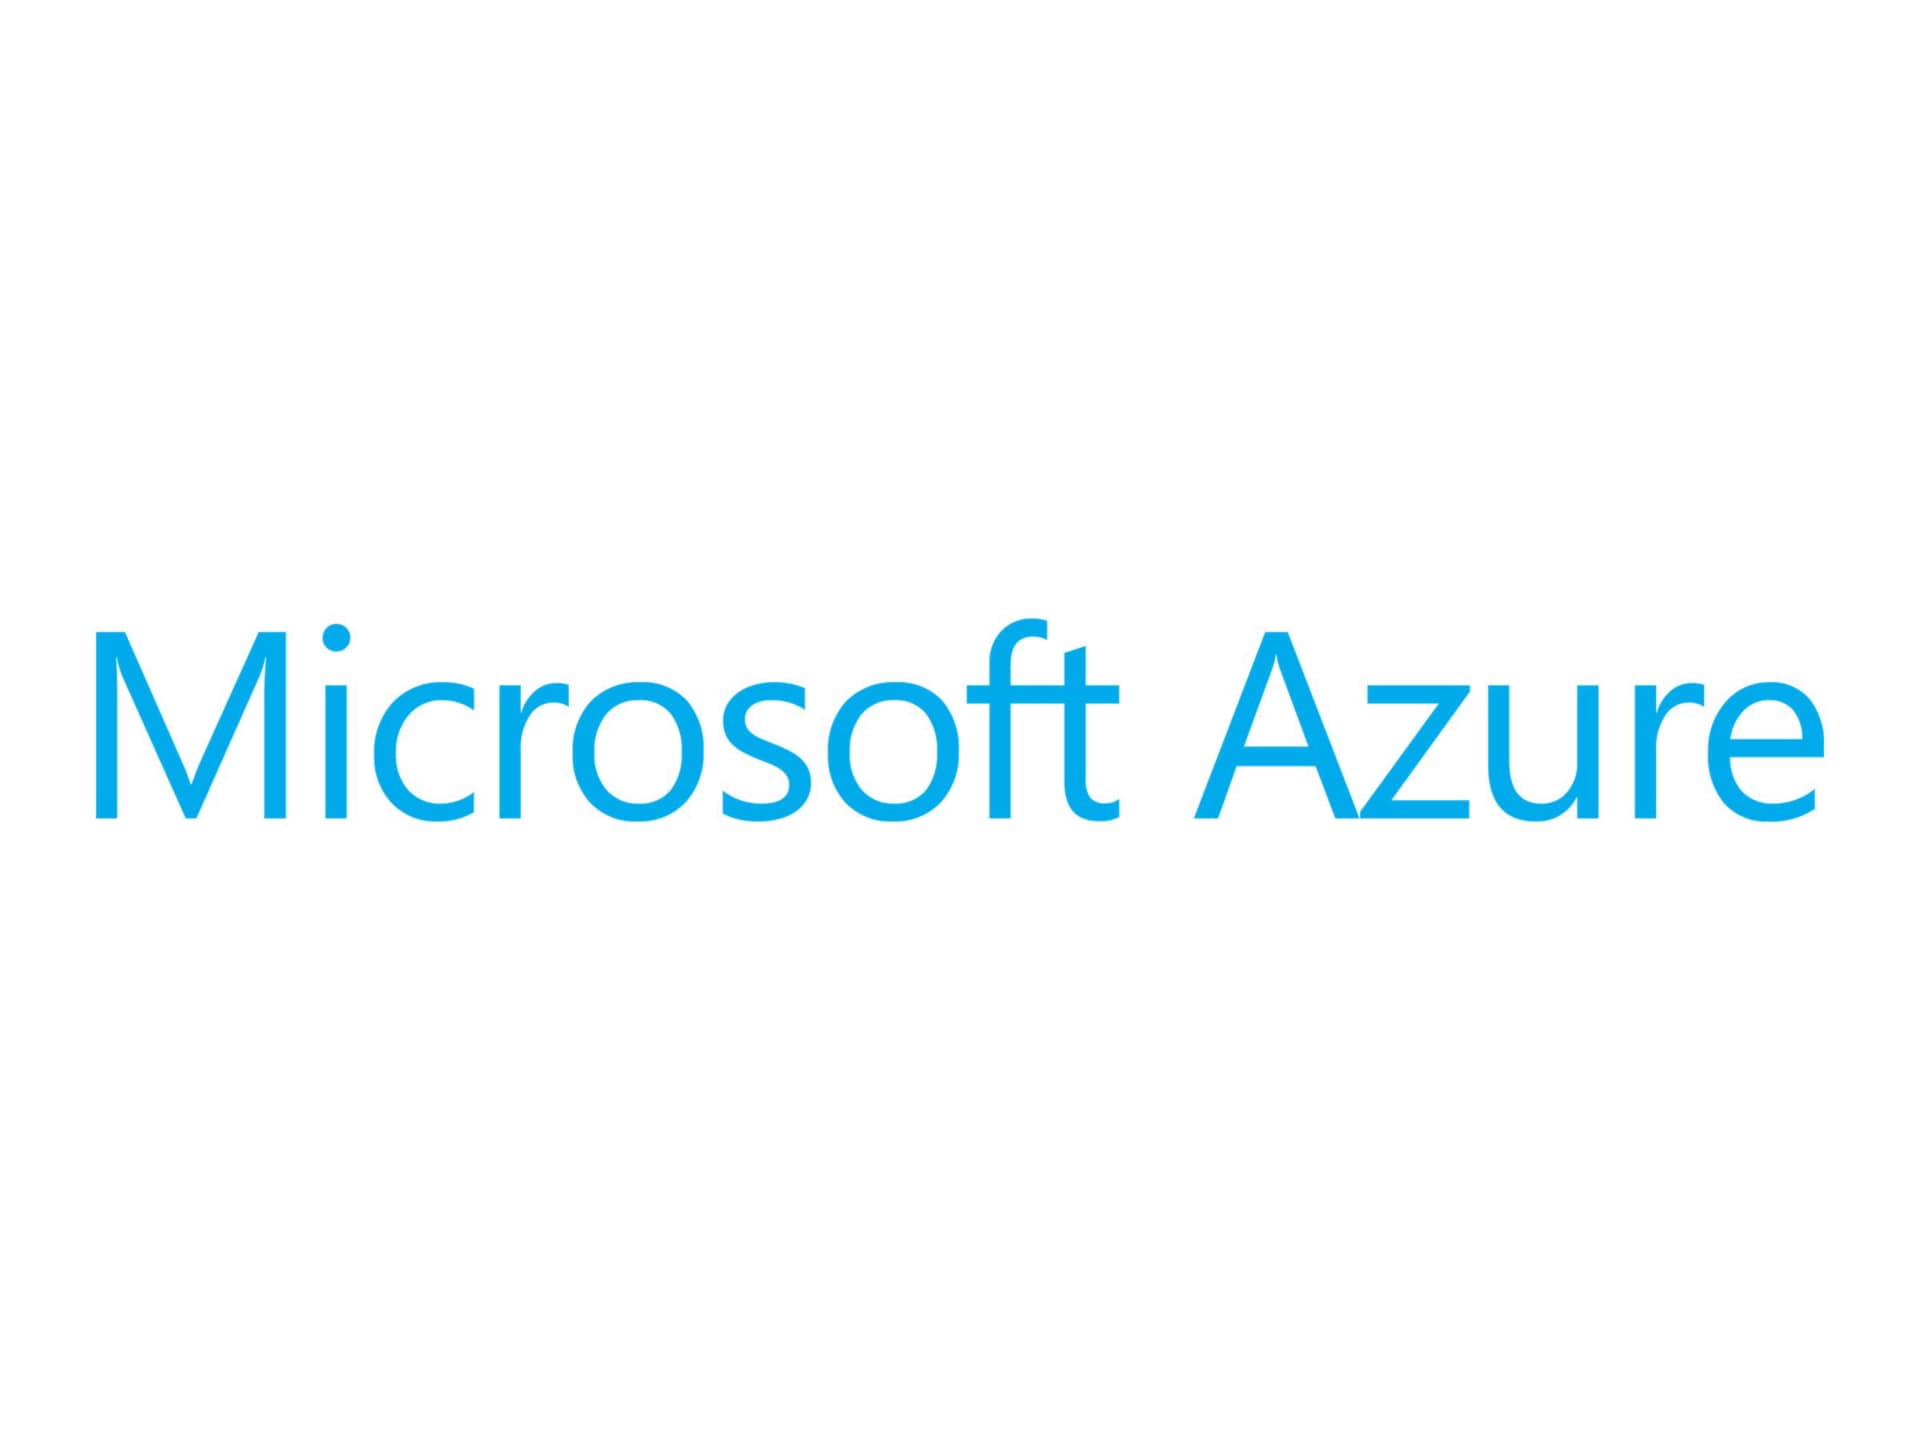 Microsoft Azure Virtual Network - overage fee - 100 hours